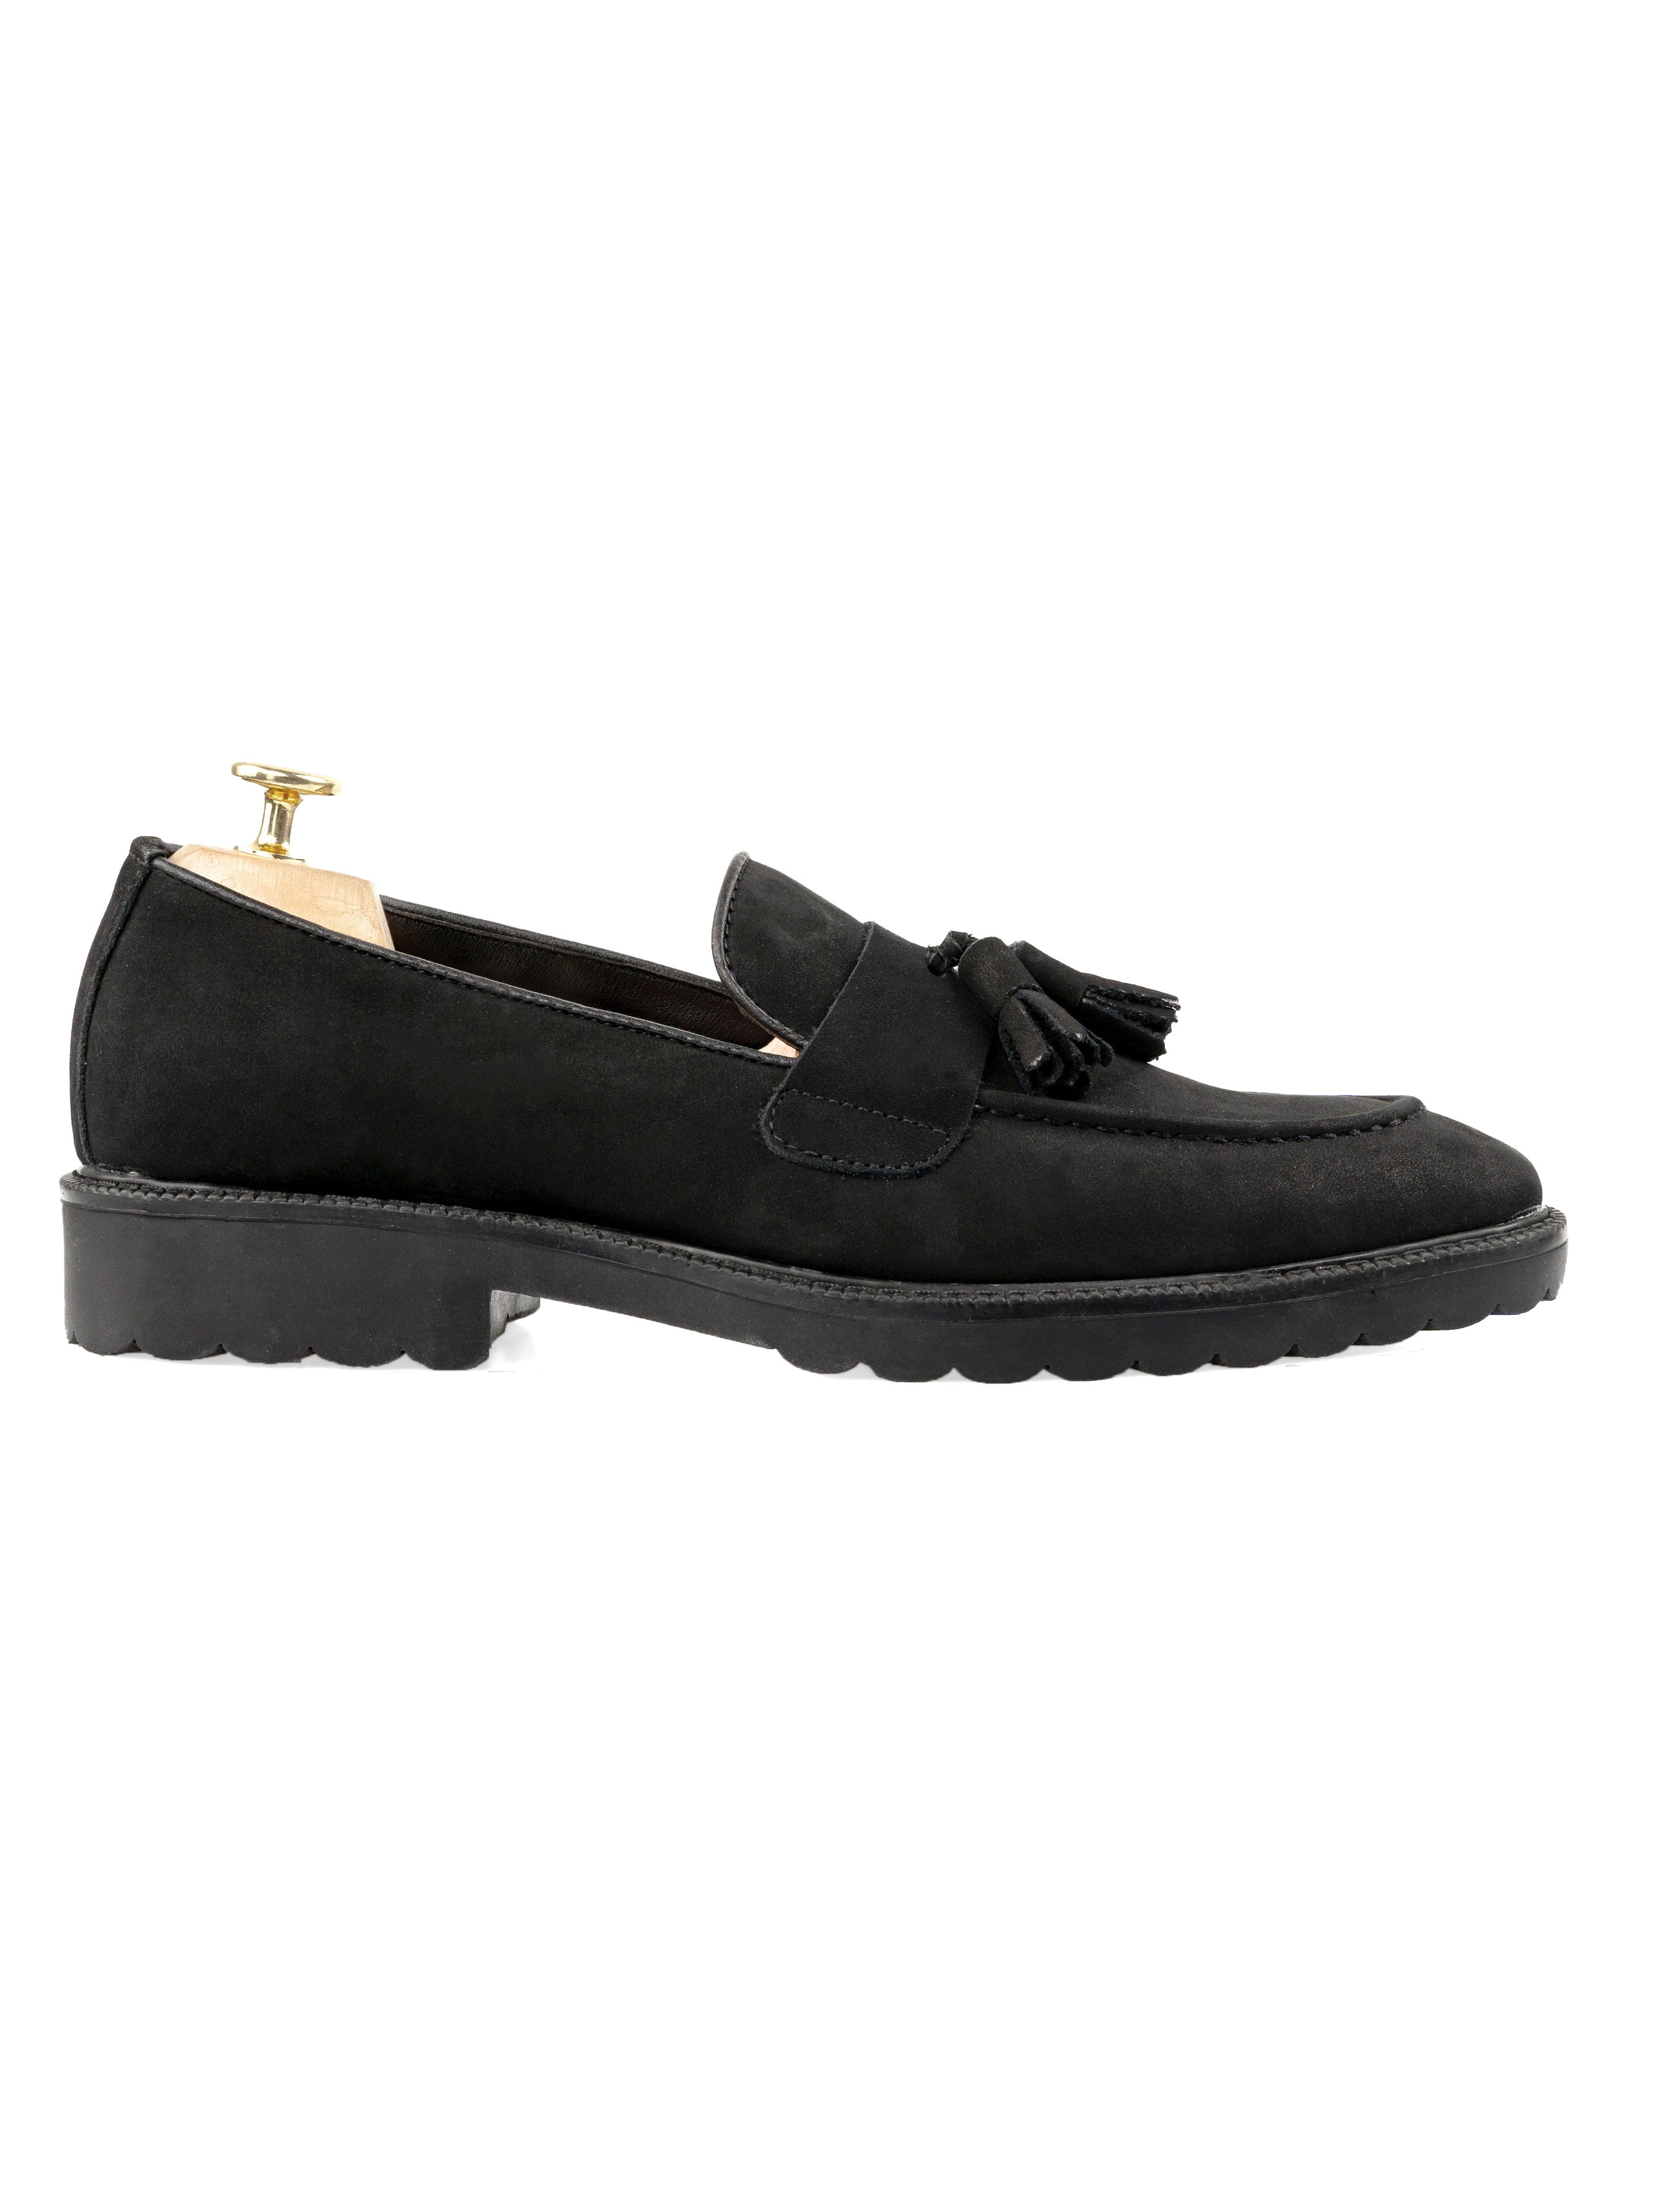 Rocky Tassel Loafer - Black Nubuck Leather (Combat Sole) - Zeve Shoes